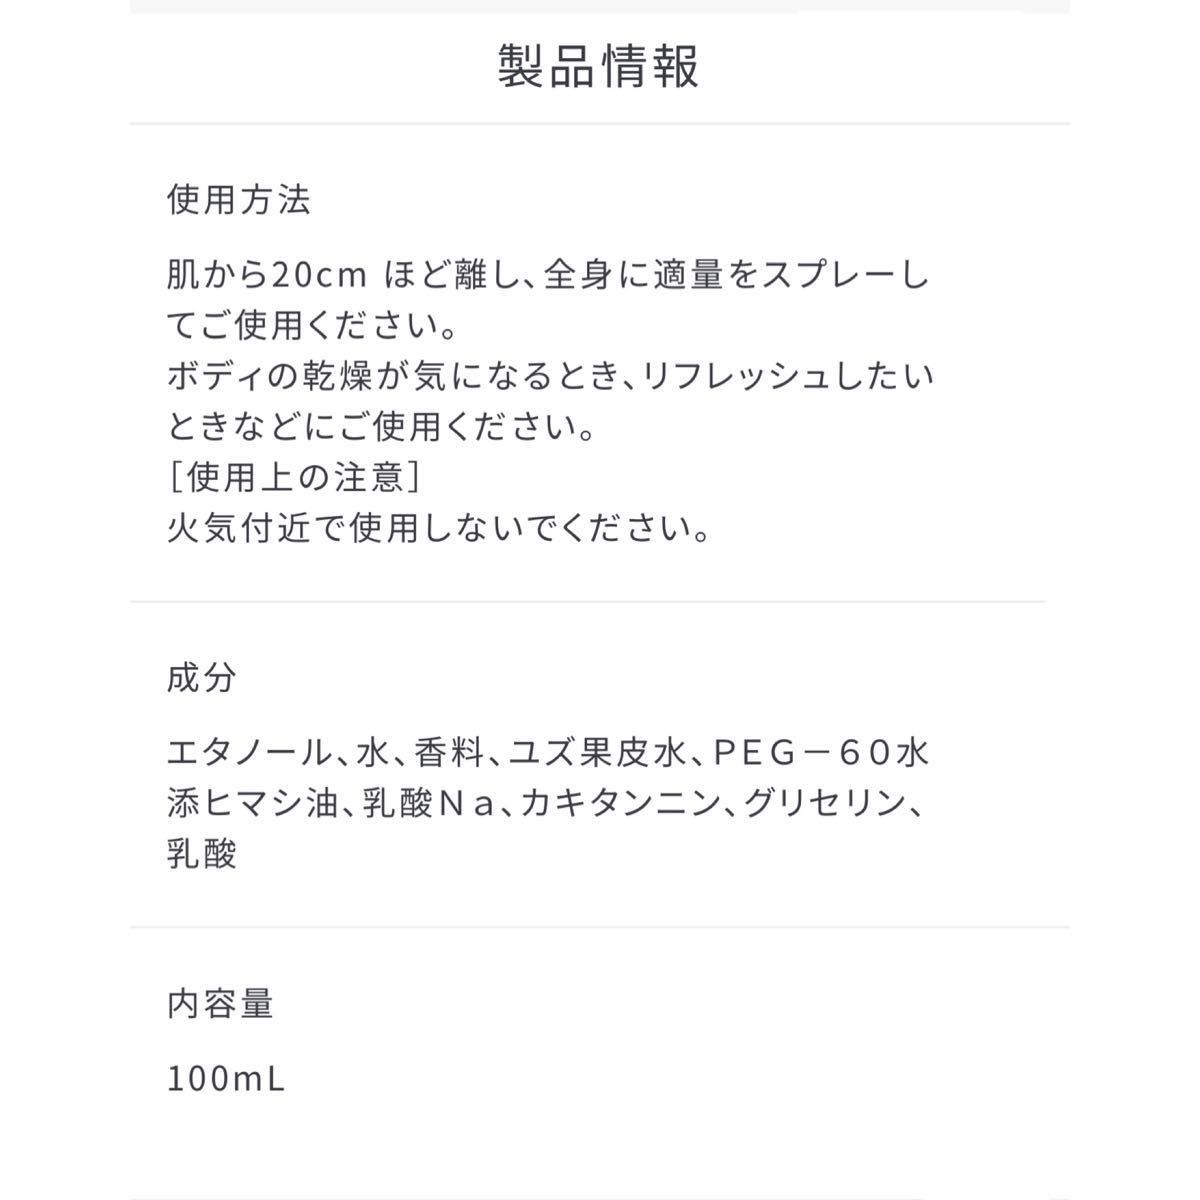 【SHIRO】サクラ219 ボディミスト 新品未使用 パッケージレス商品